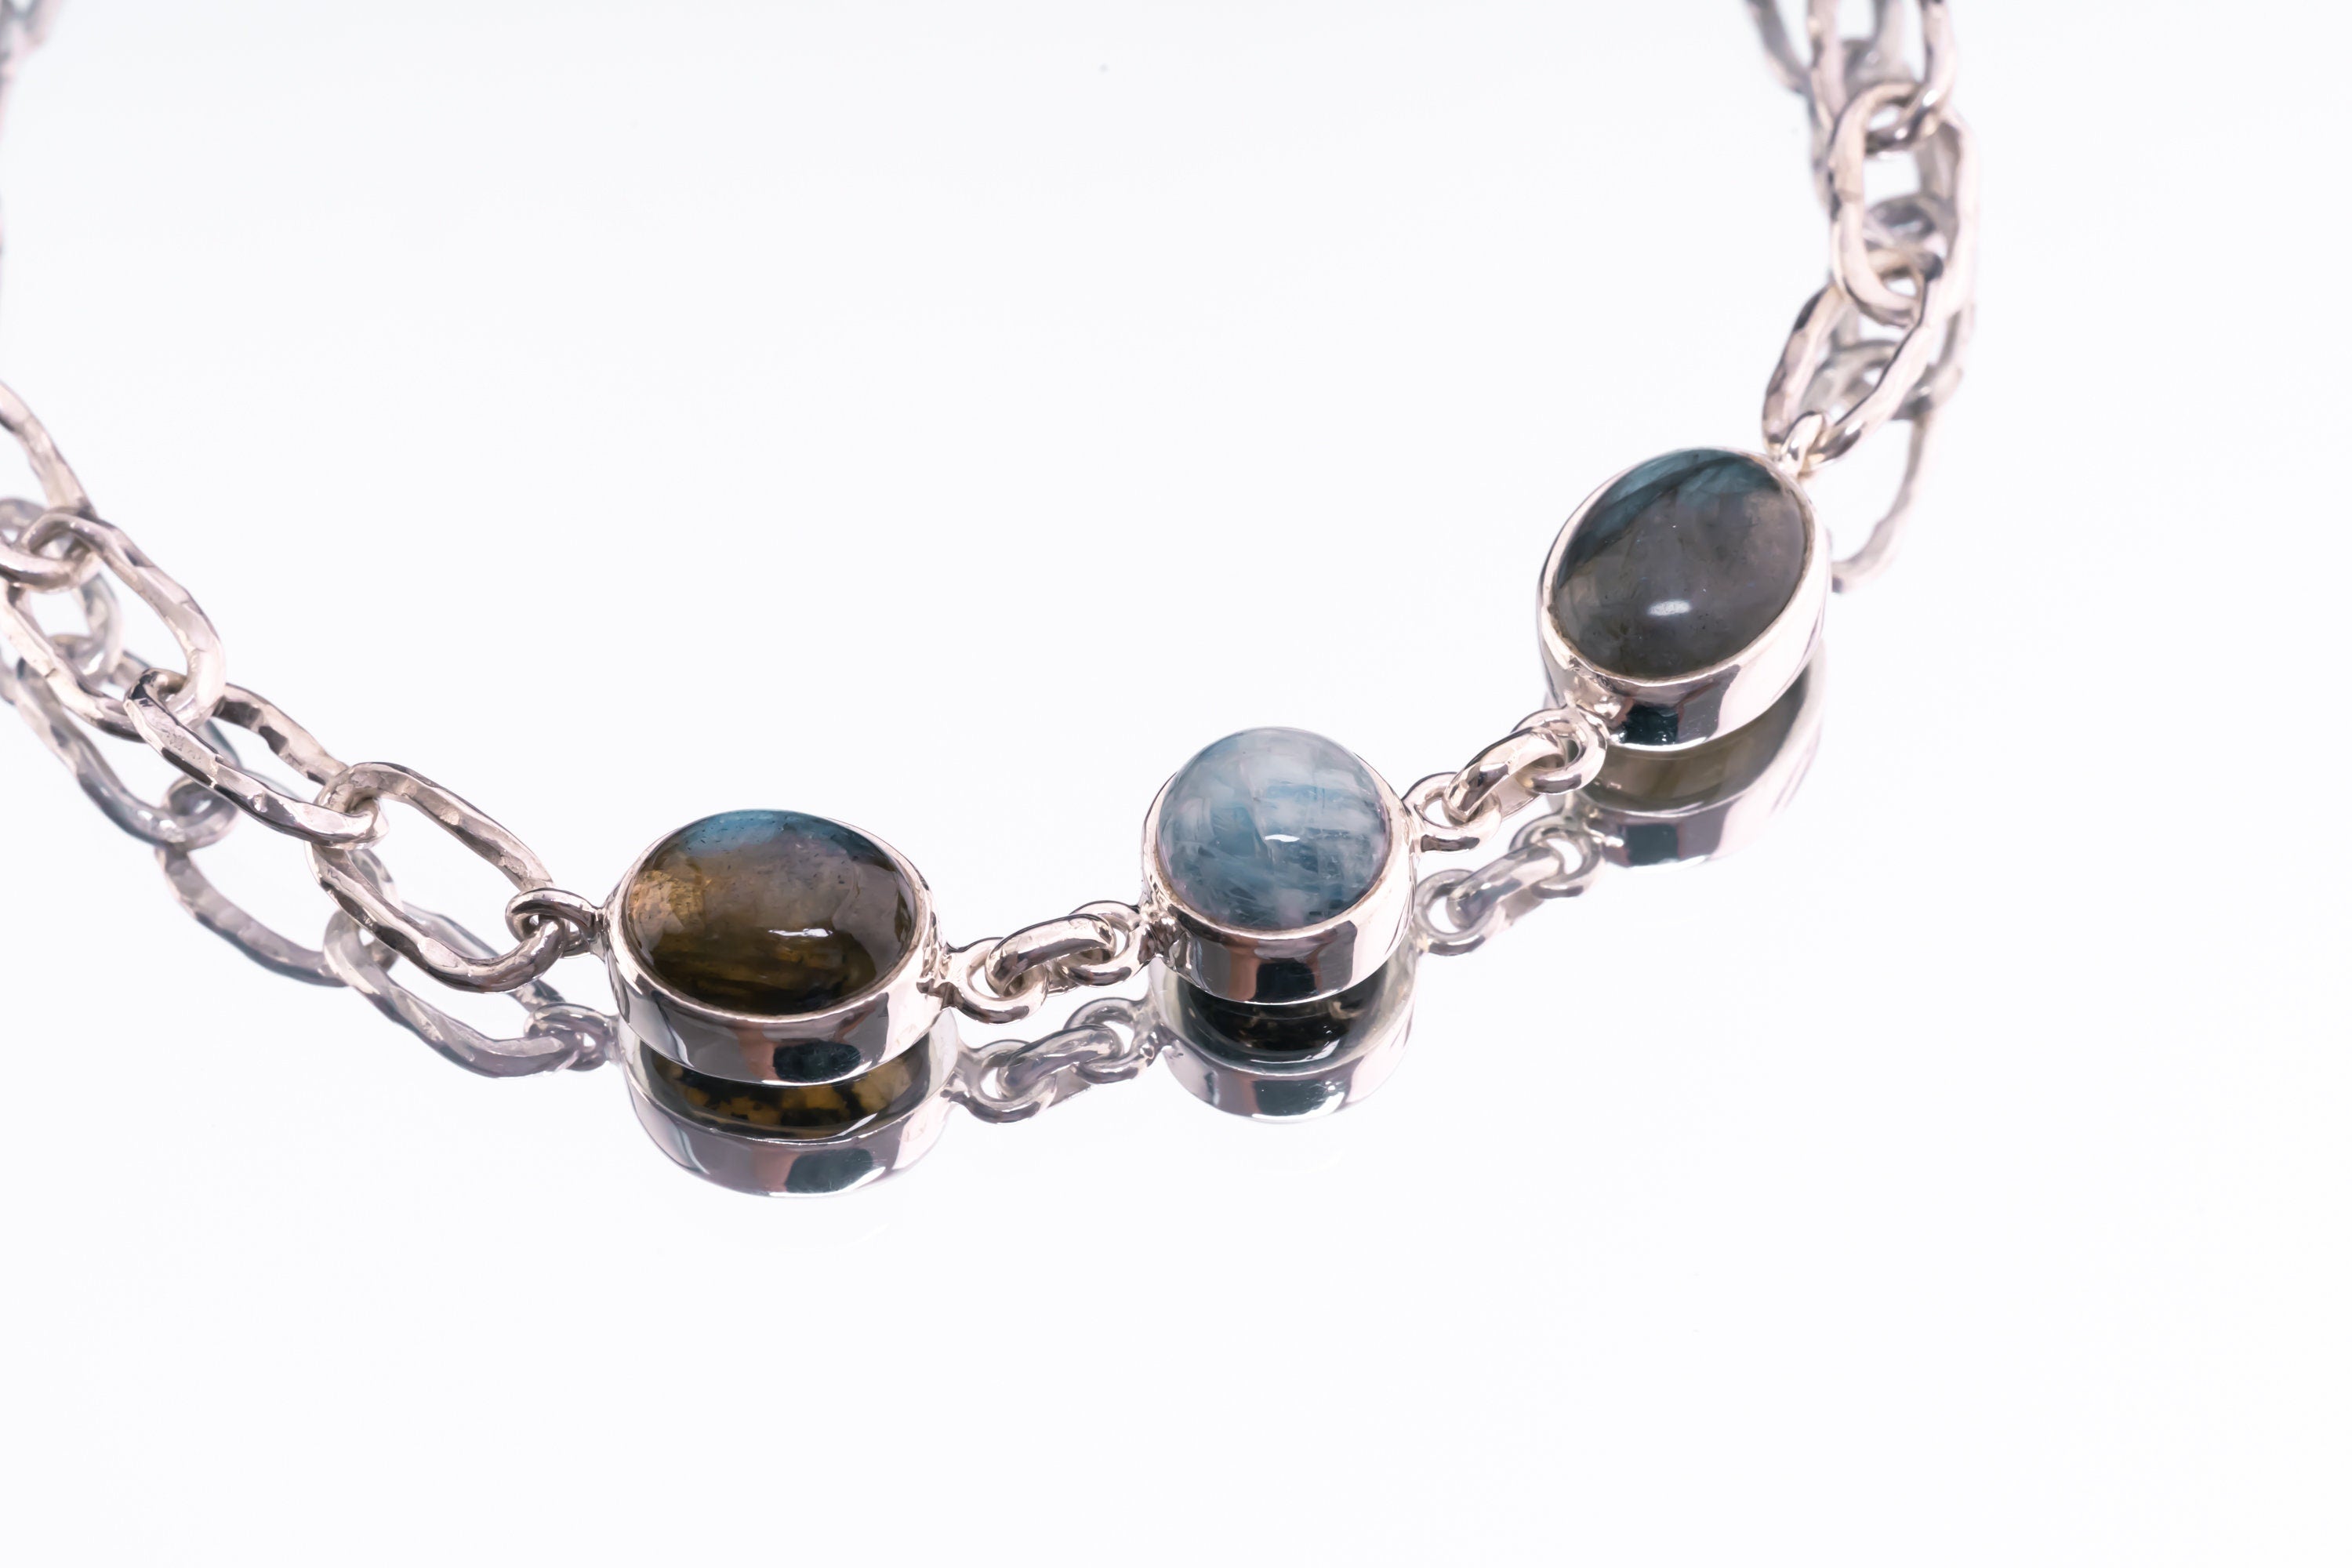 Celestial Silver Bracelet: Moonstone, Labradorite & Herkimer Diamond - Sterling Silver - Shiny and Polish Finish